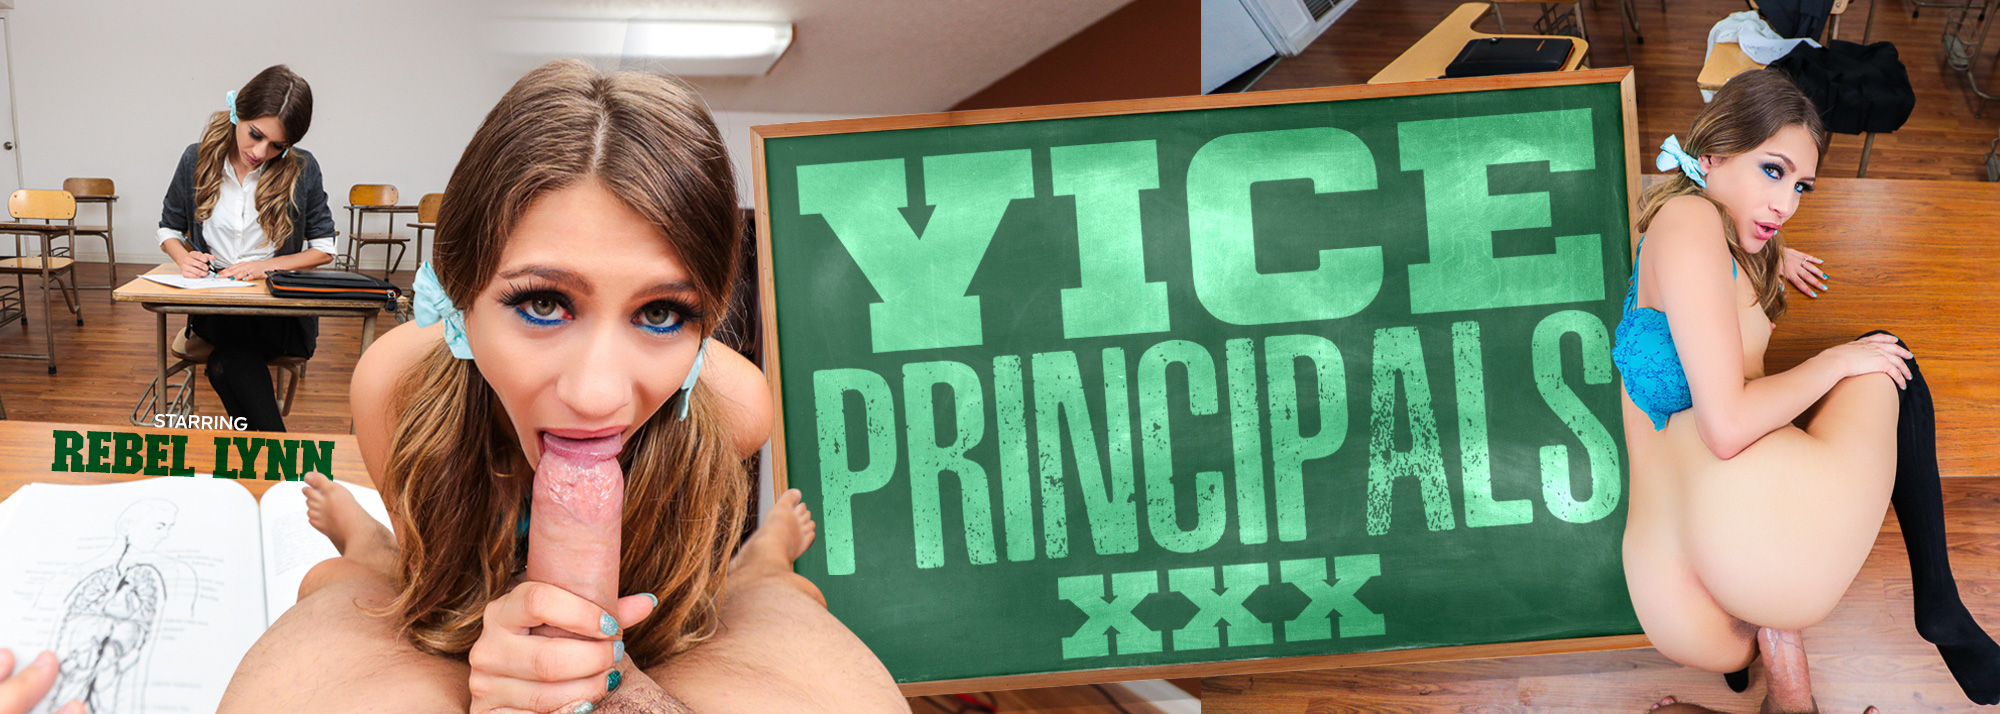 Vice Principals XXX - VR Porn Video, Starring: Rebel Lynn